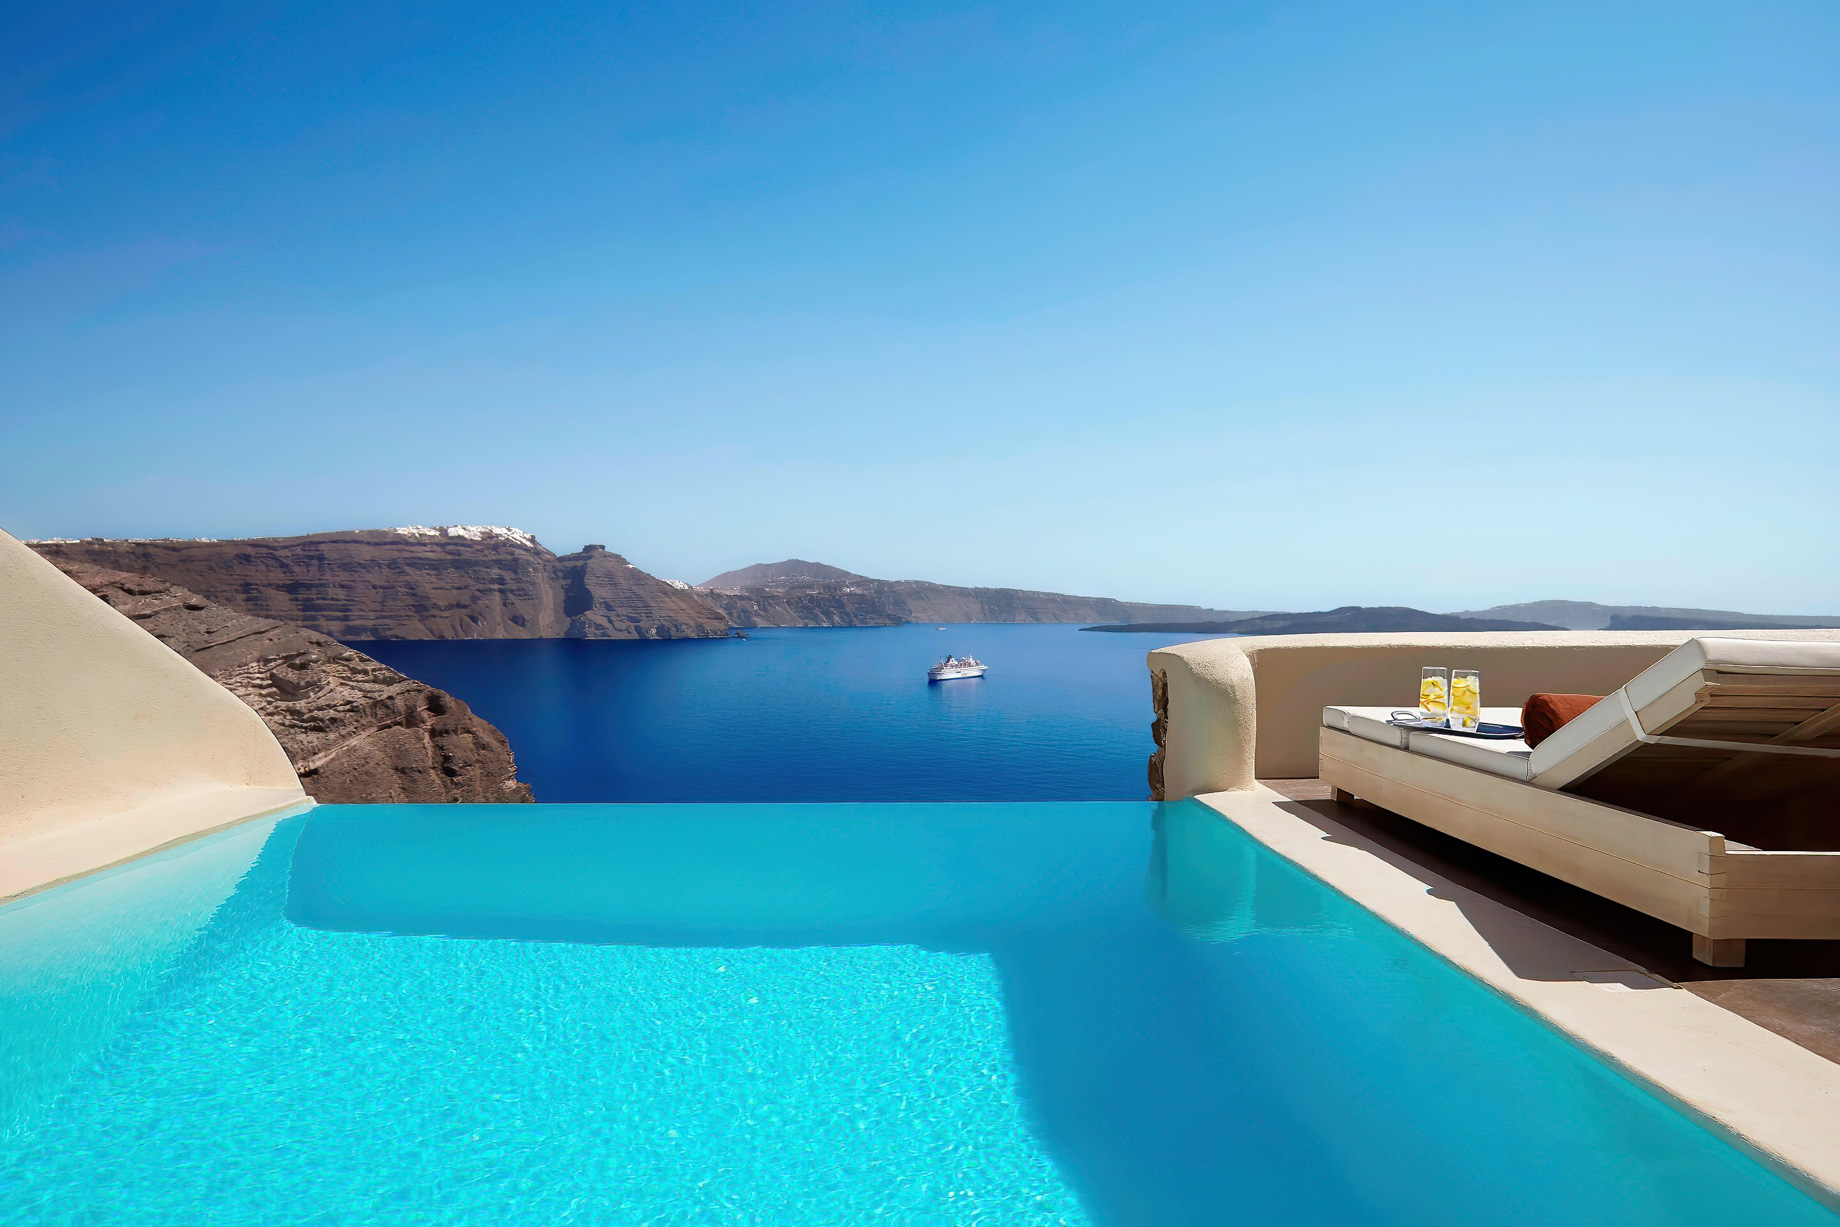 Mystique Hotel Santorini – Oia, Santorini Island, Greece – Mystery Villa Private Infinity Pool